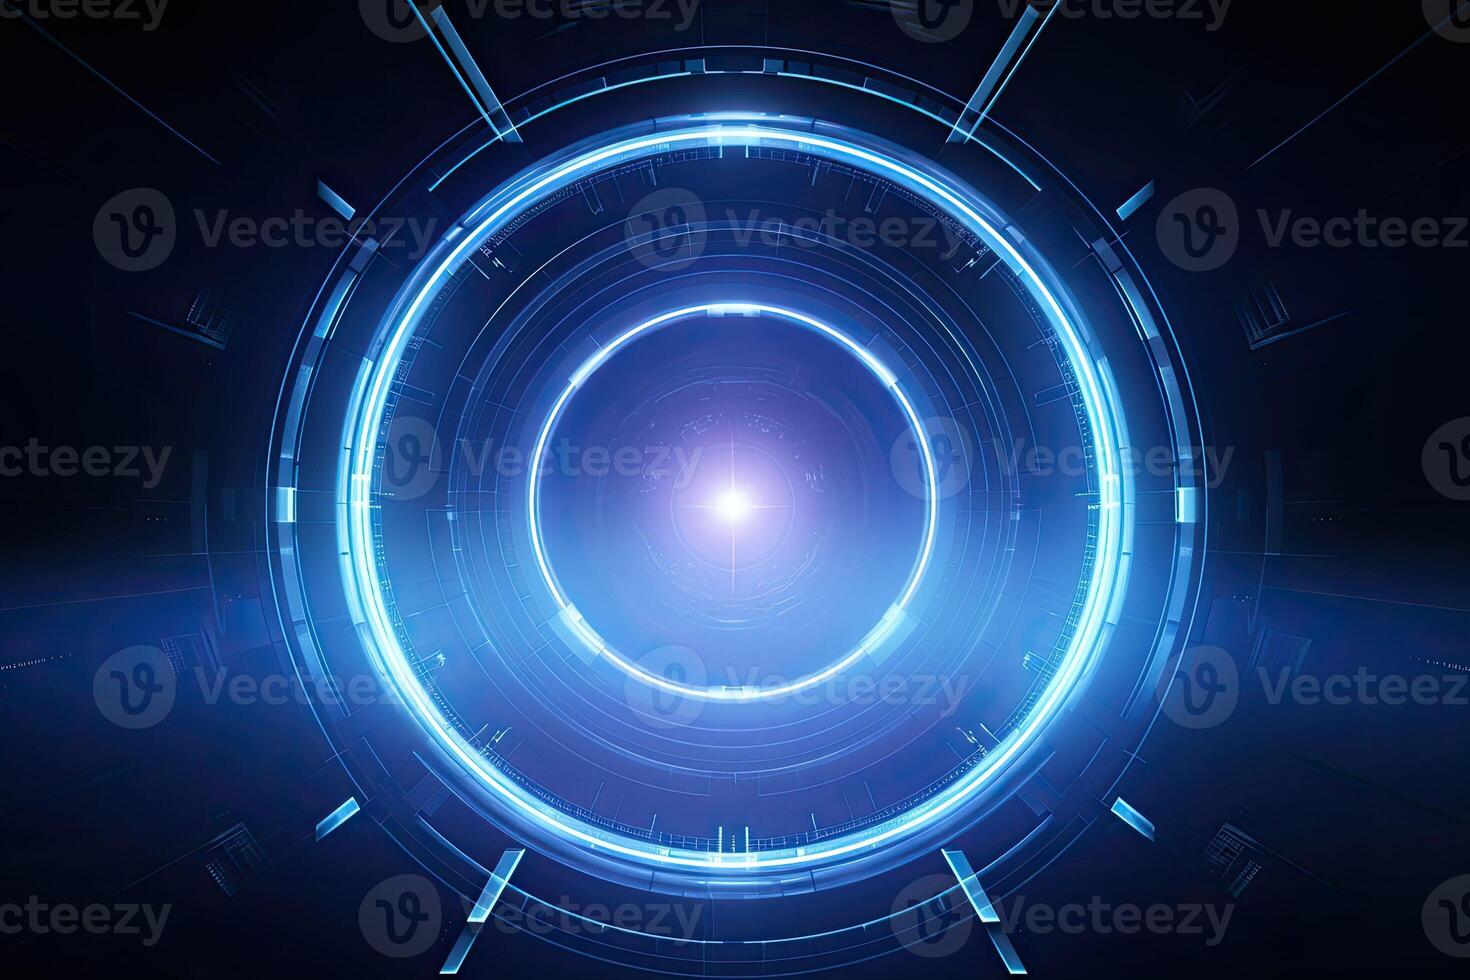 AI generated Futuristic Blue Neon Light Circle on Digital Technology Background photo